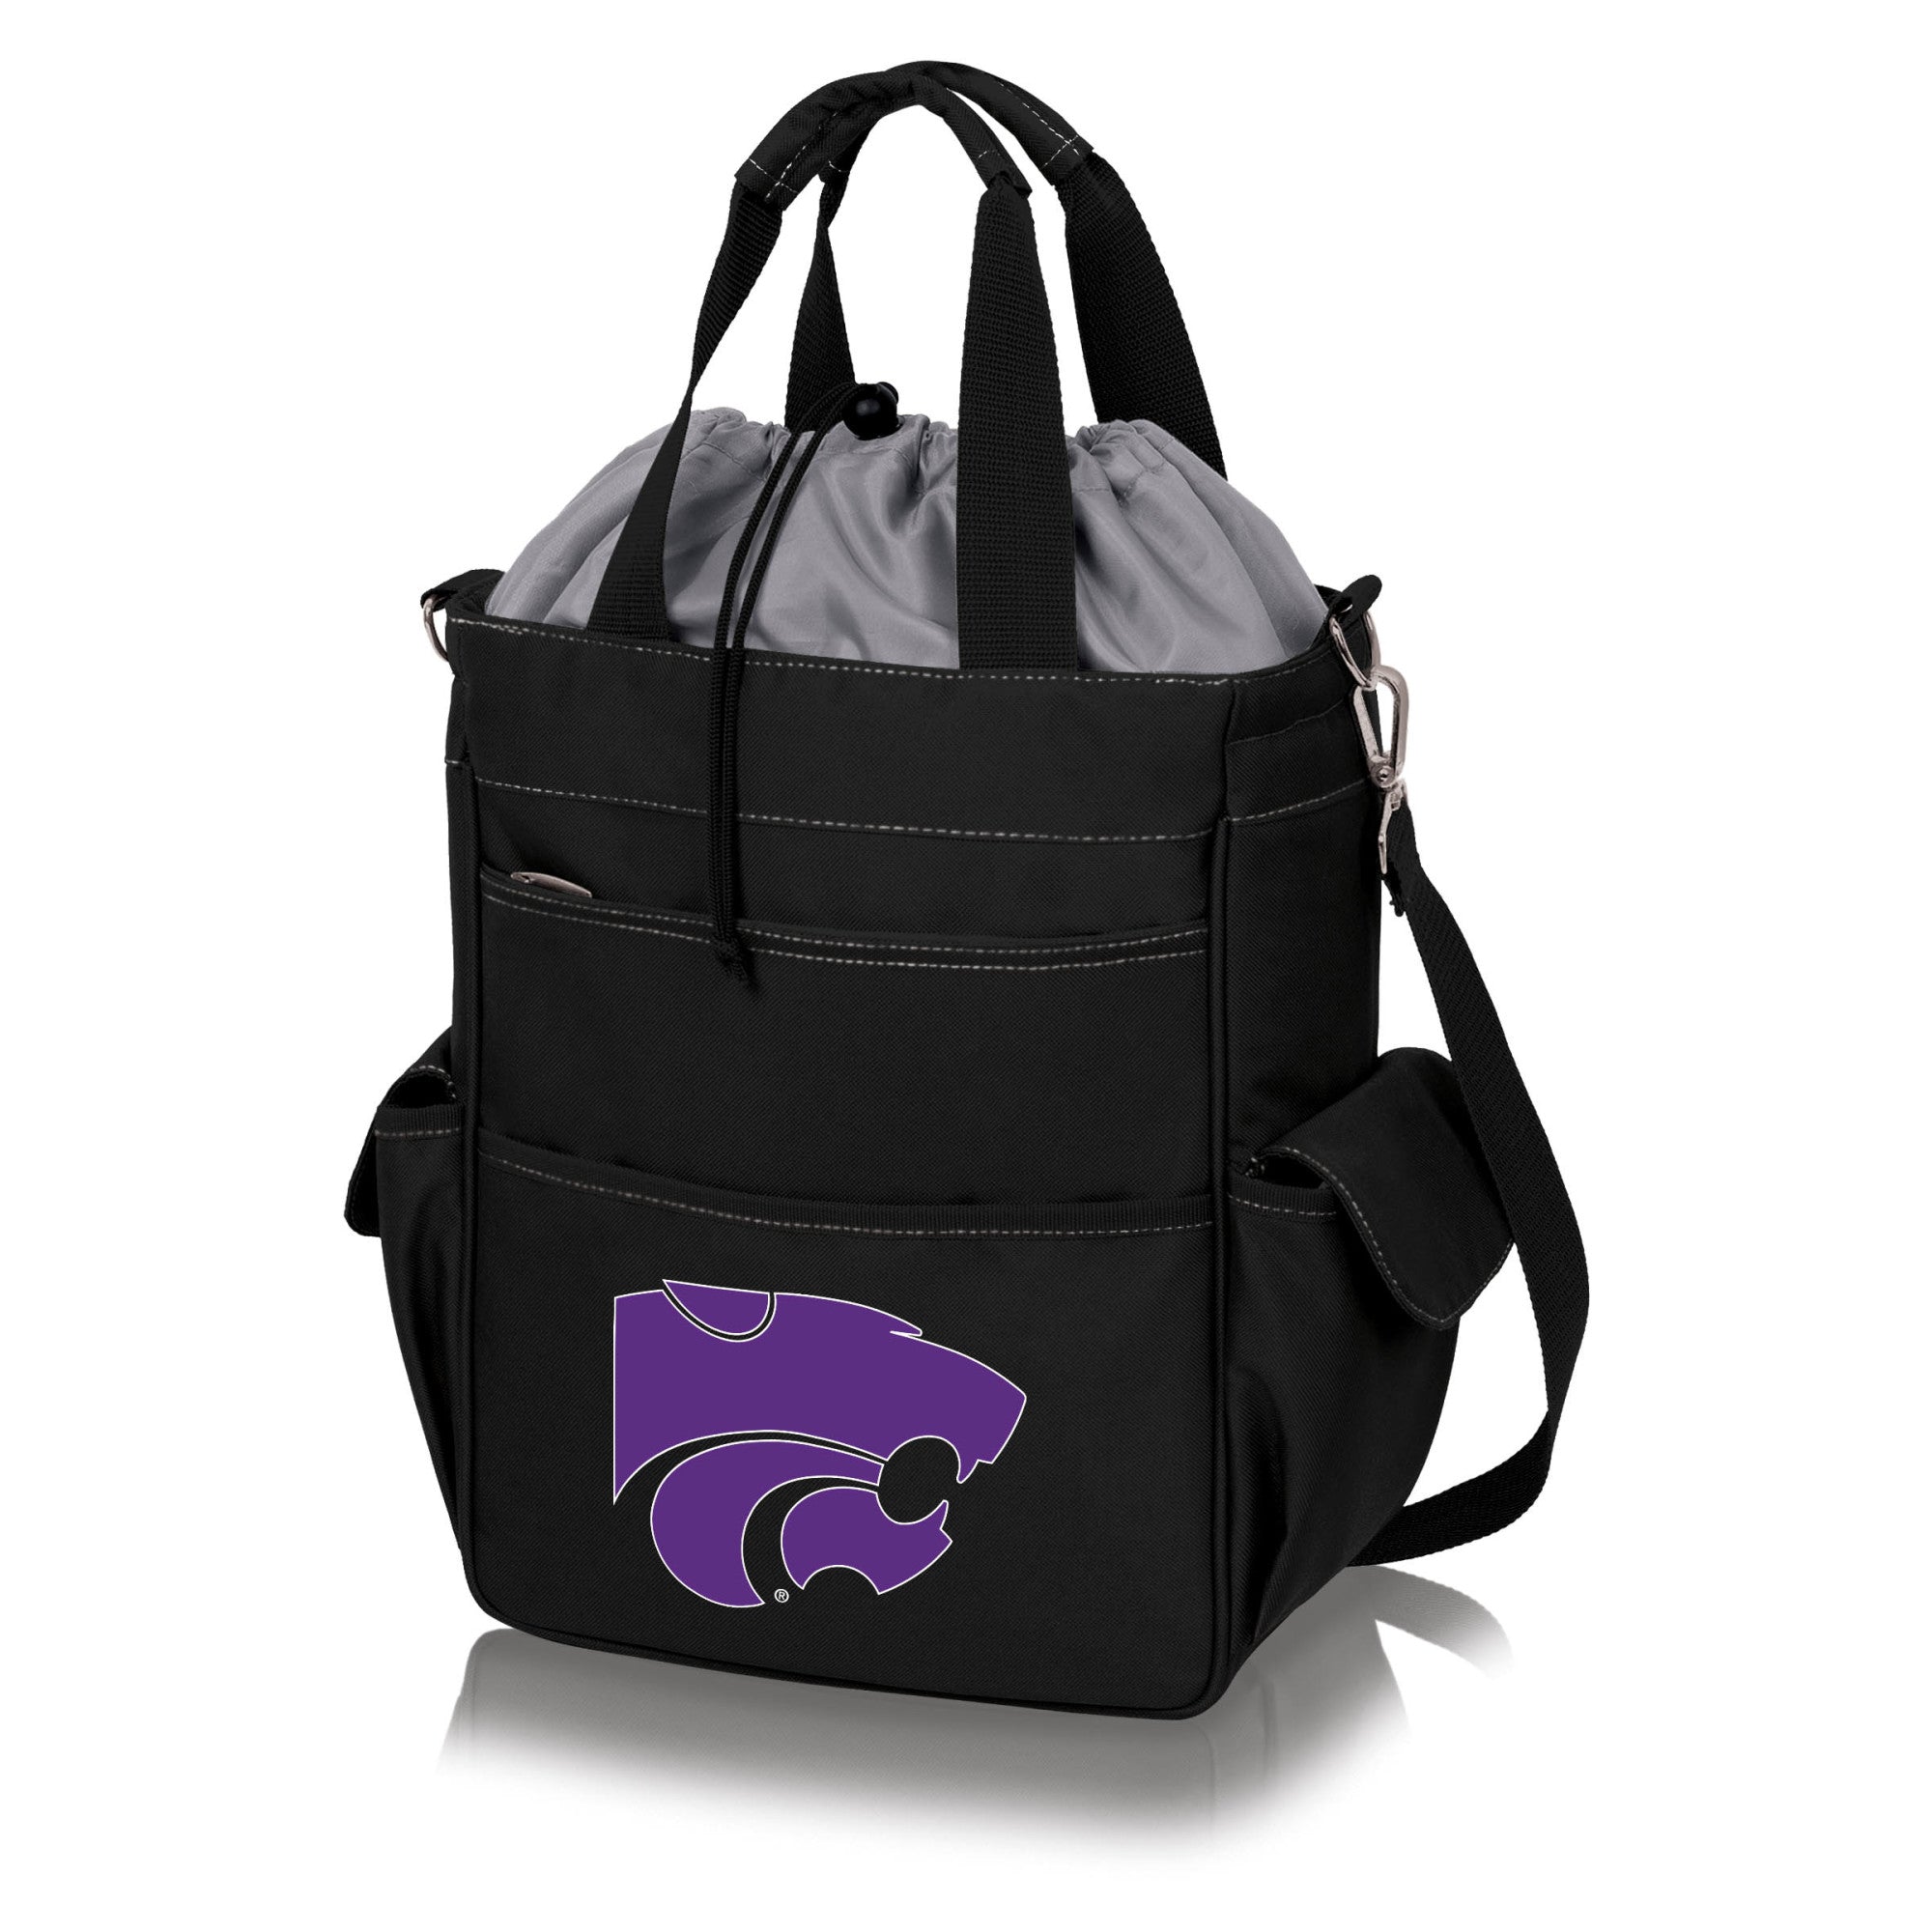 Kansas State Wildcats - Activo Cooler Tote Bag